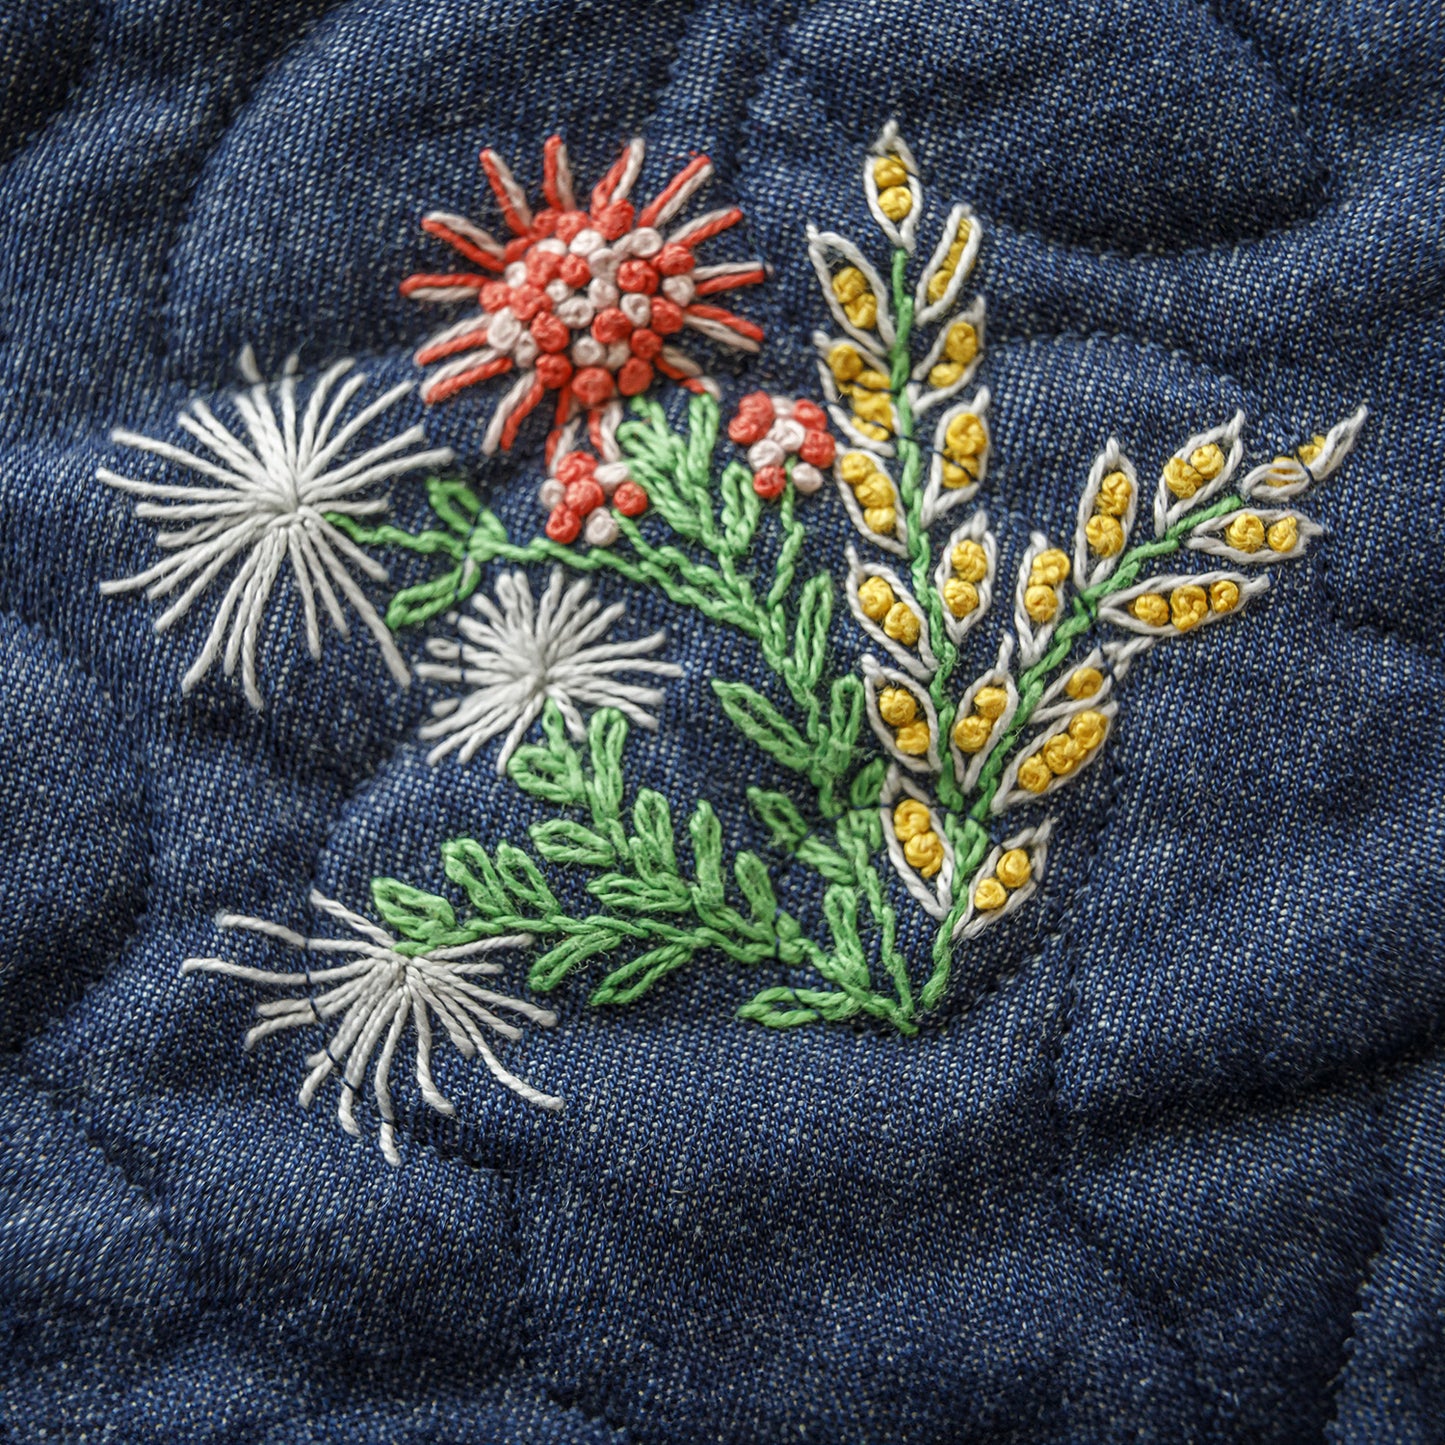 PREORDER - Ingrid's Wildflowers - An Heirloom Embroidery Kit by Missouri Star Alternative View #29